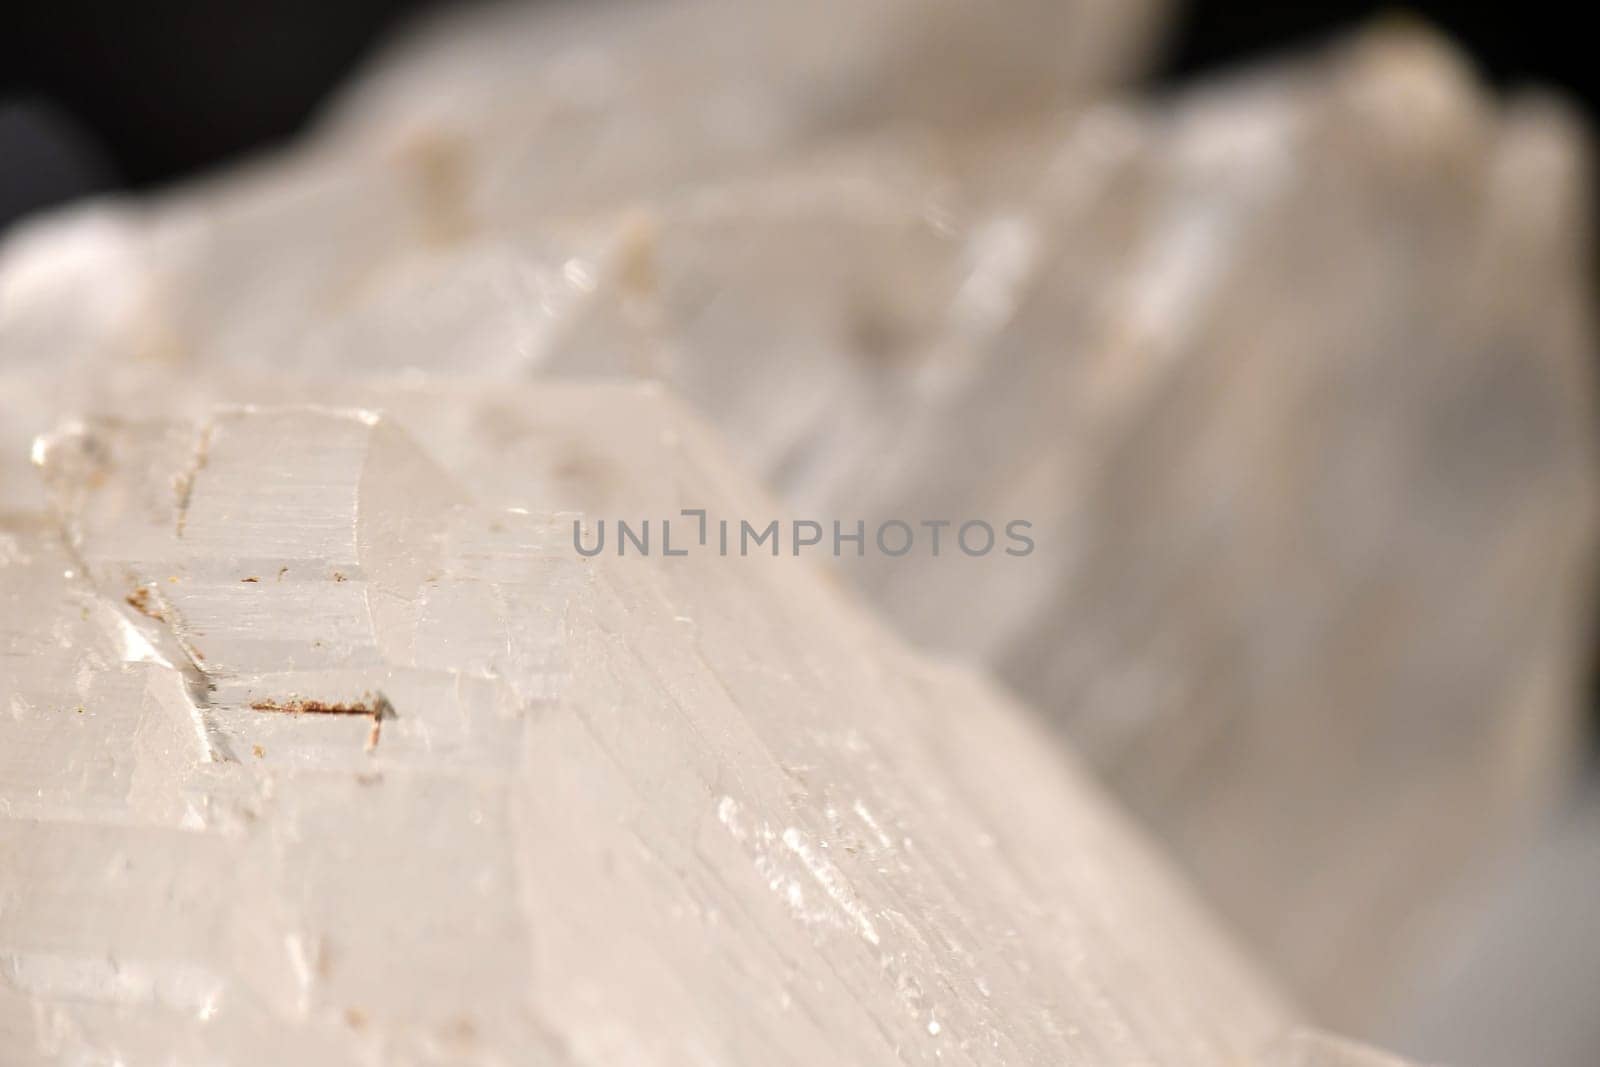 quartz crystal rock macro by AndreaIzzotti